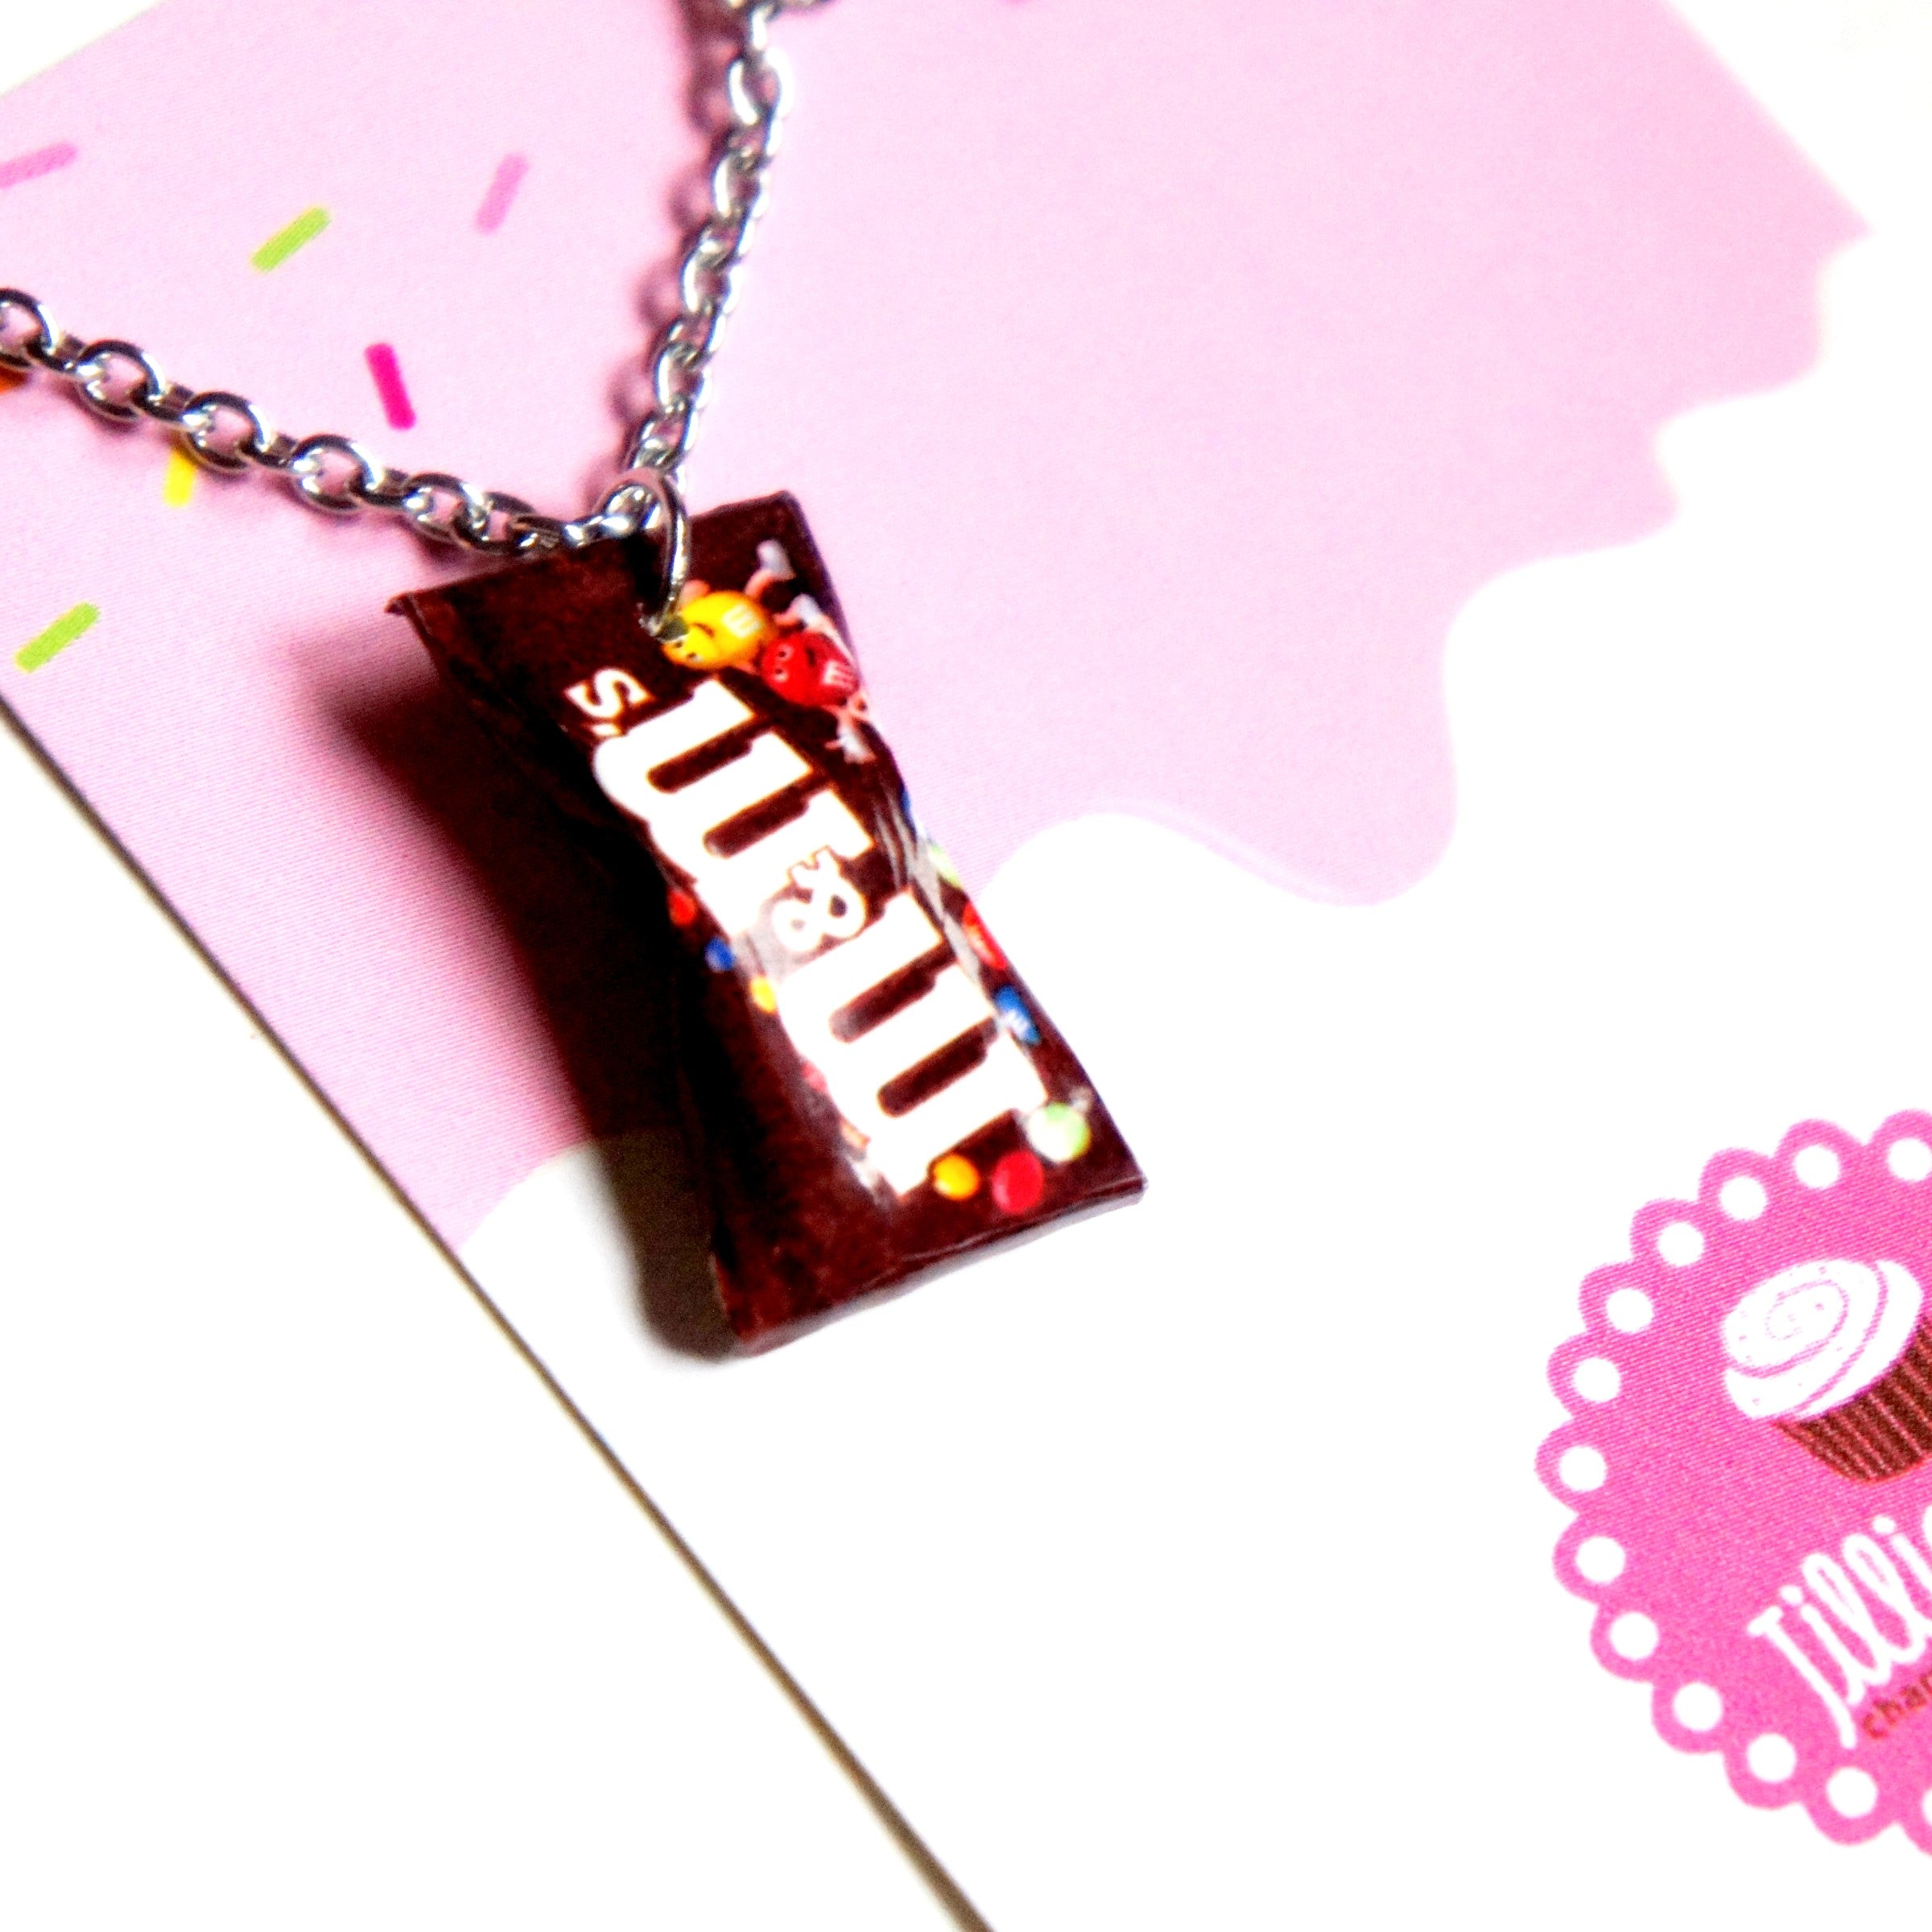 M&m's Candy Bag Necklace